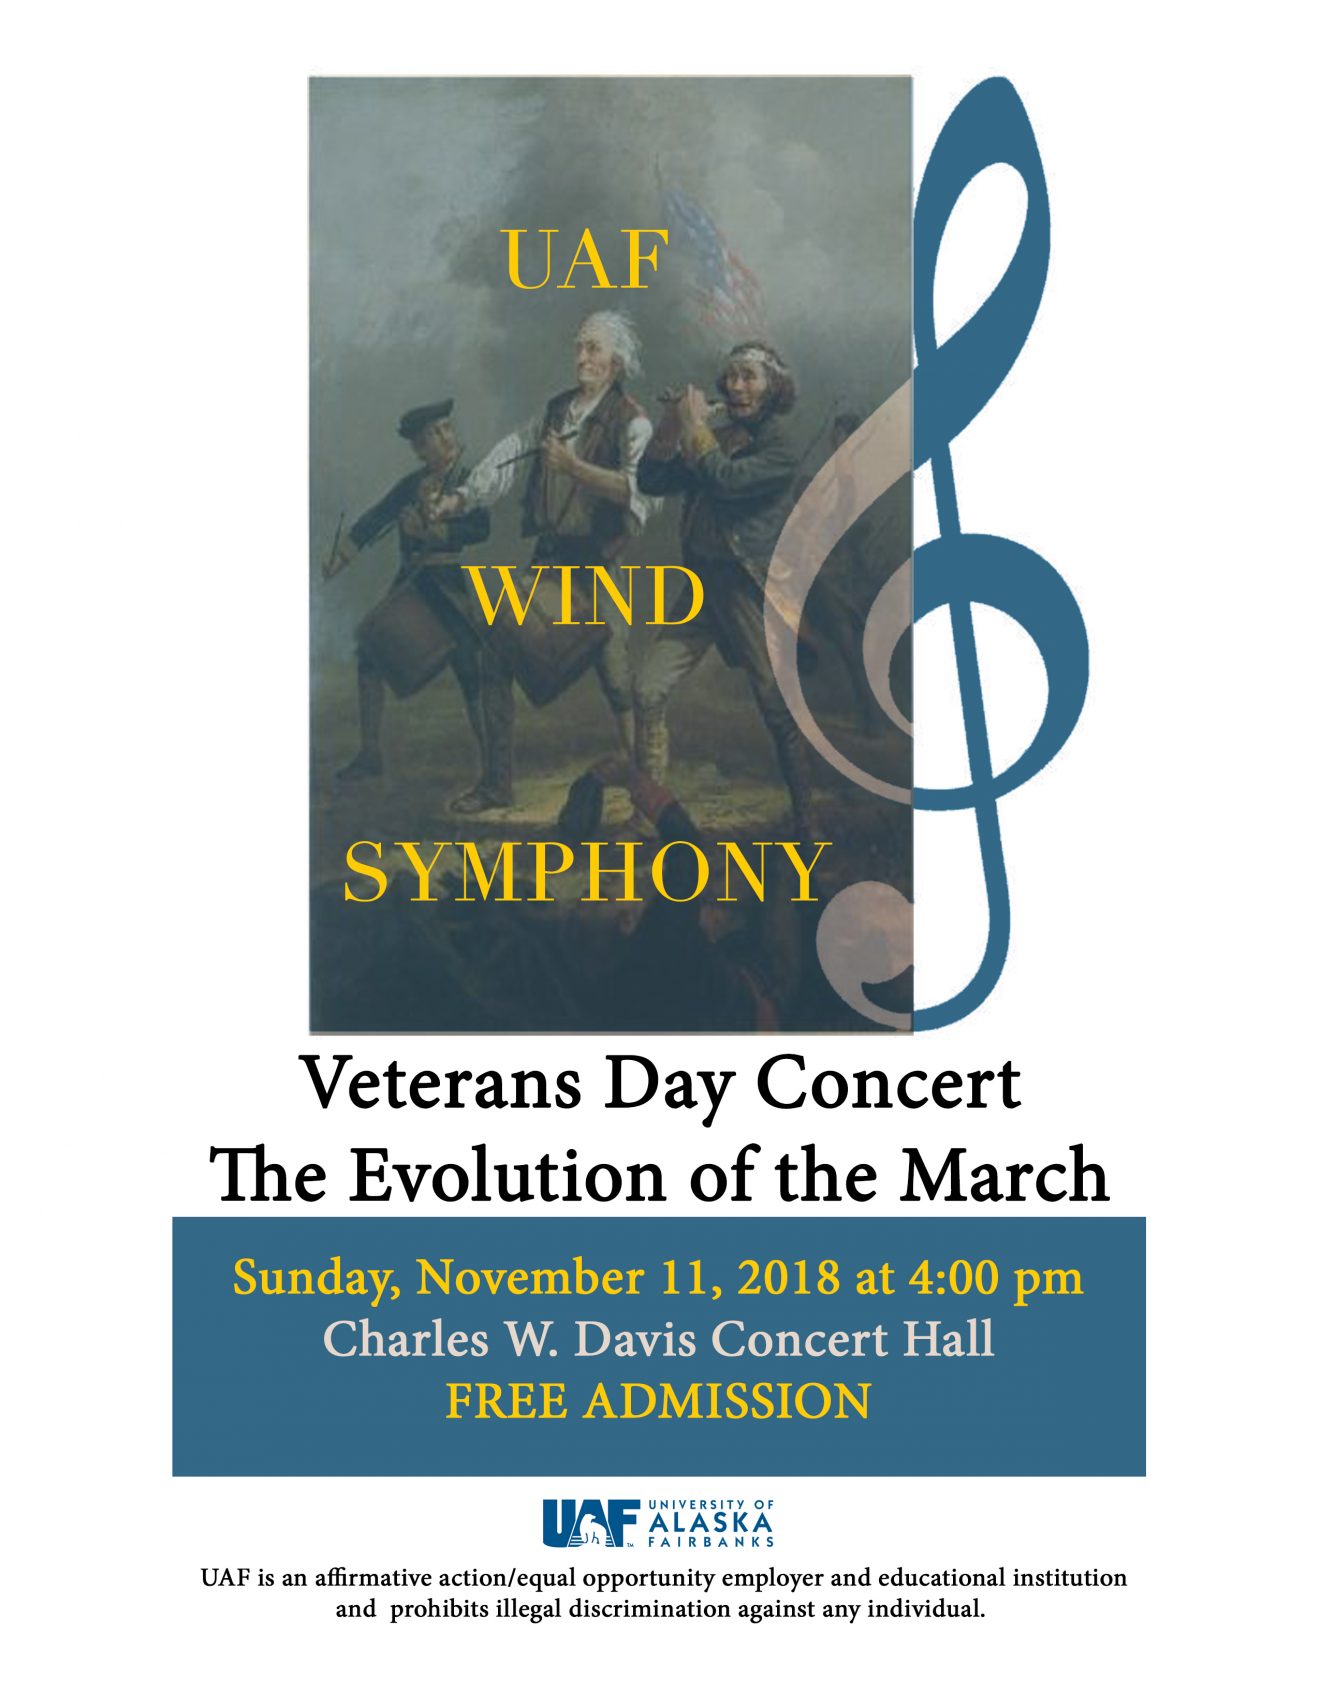 Wind Symphony veterans concert flyer